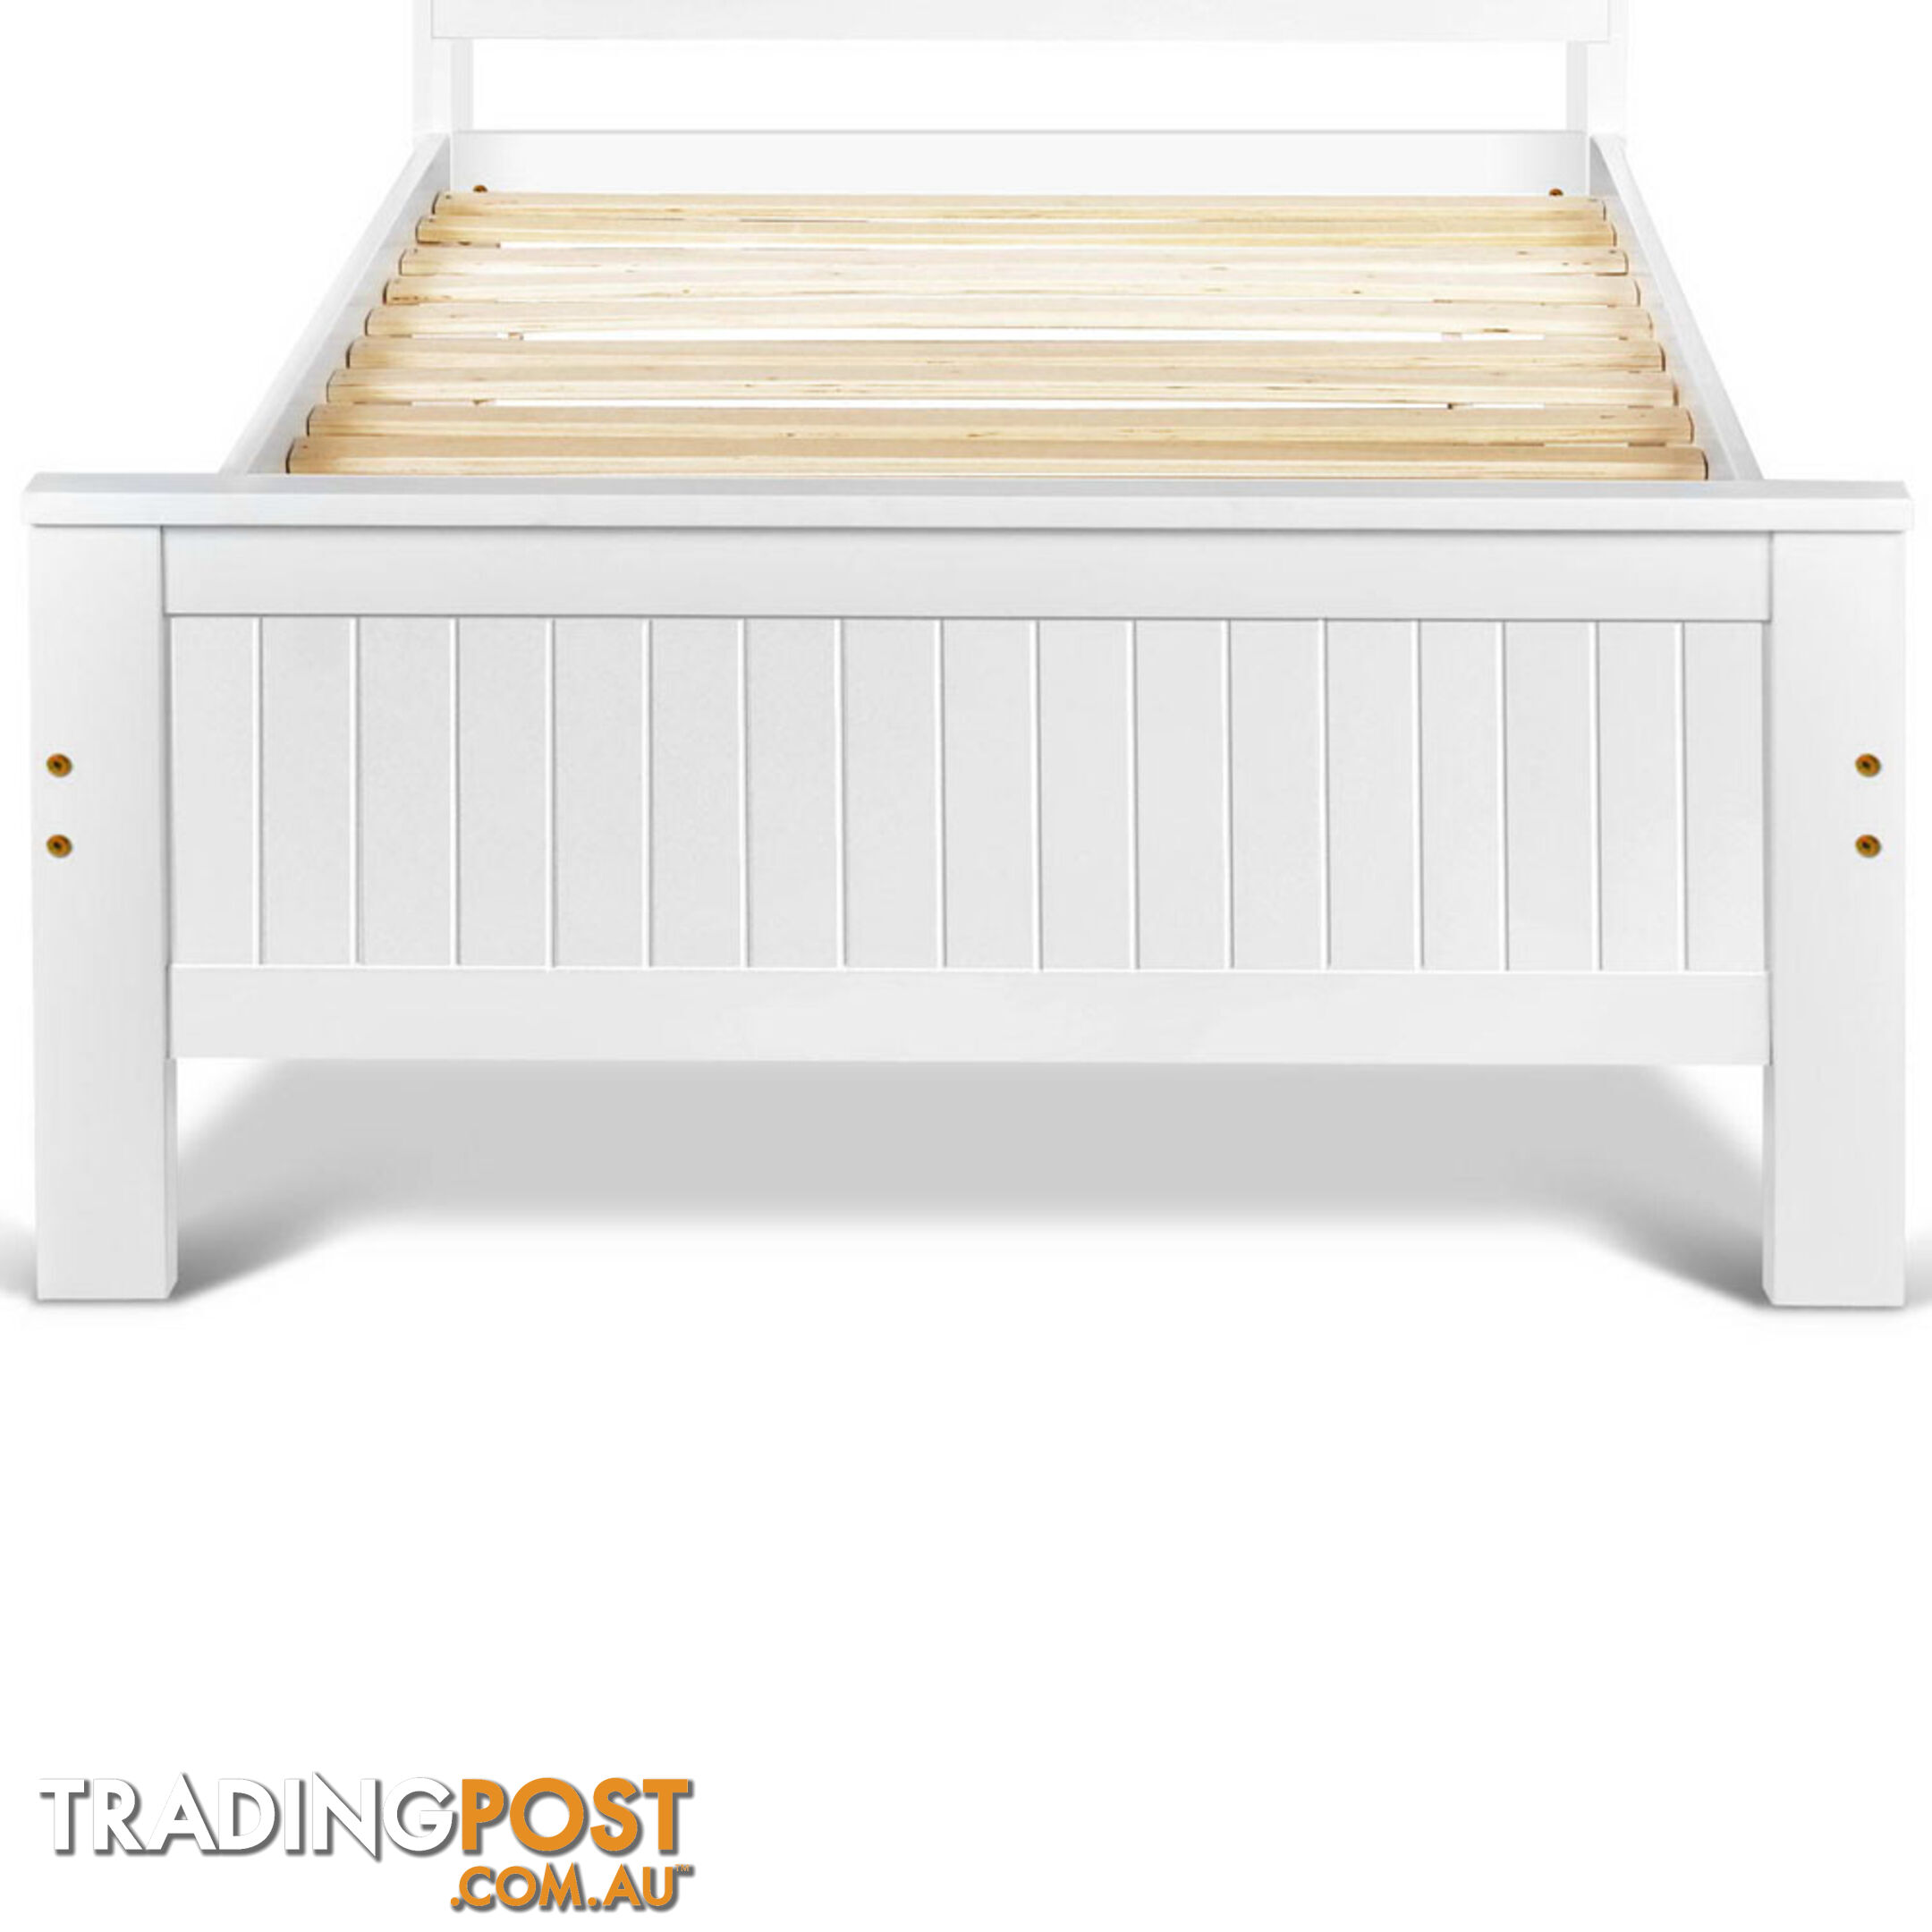 King Single Wooden Bedframe with Storage Shelf  - White